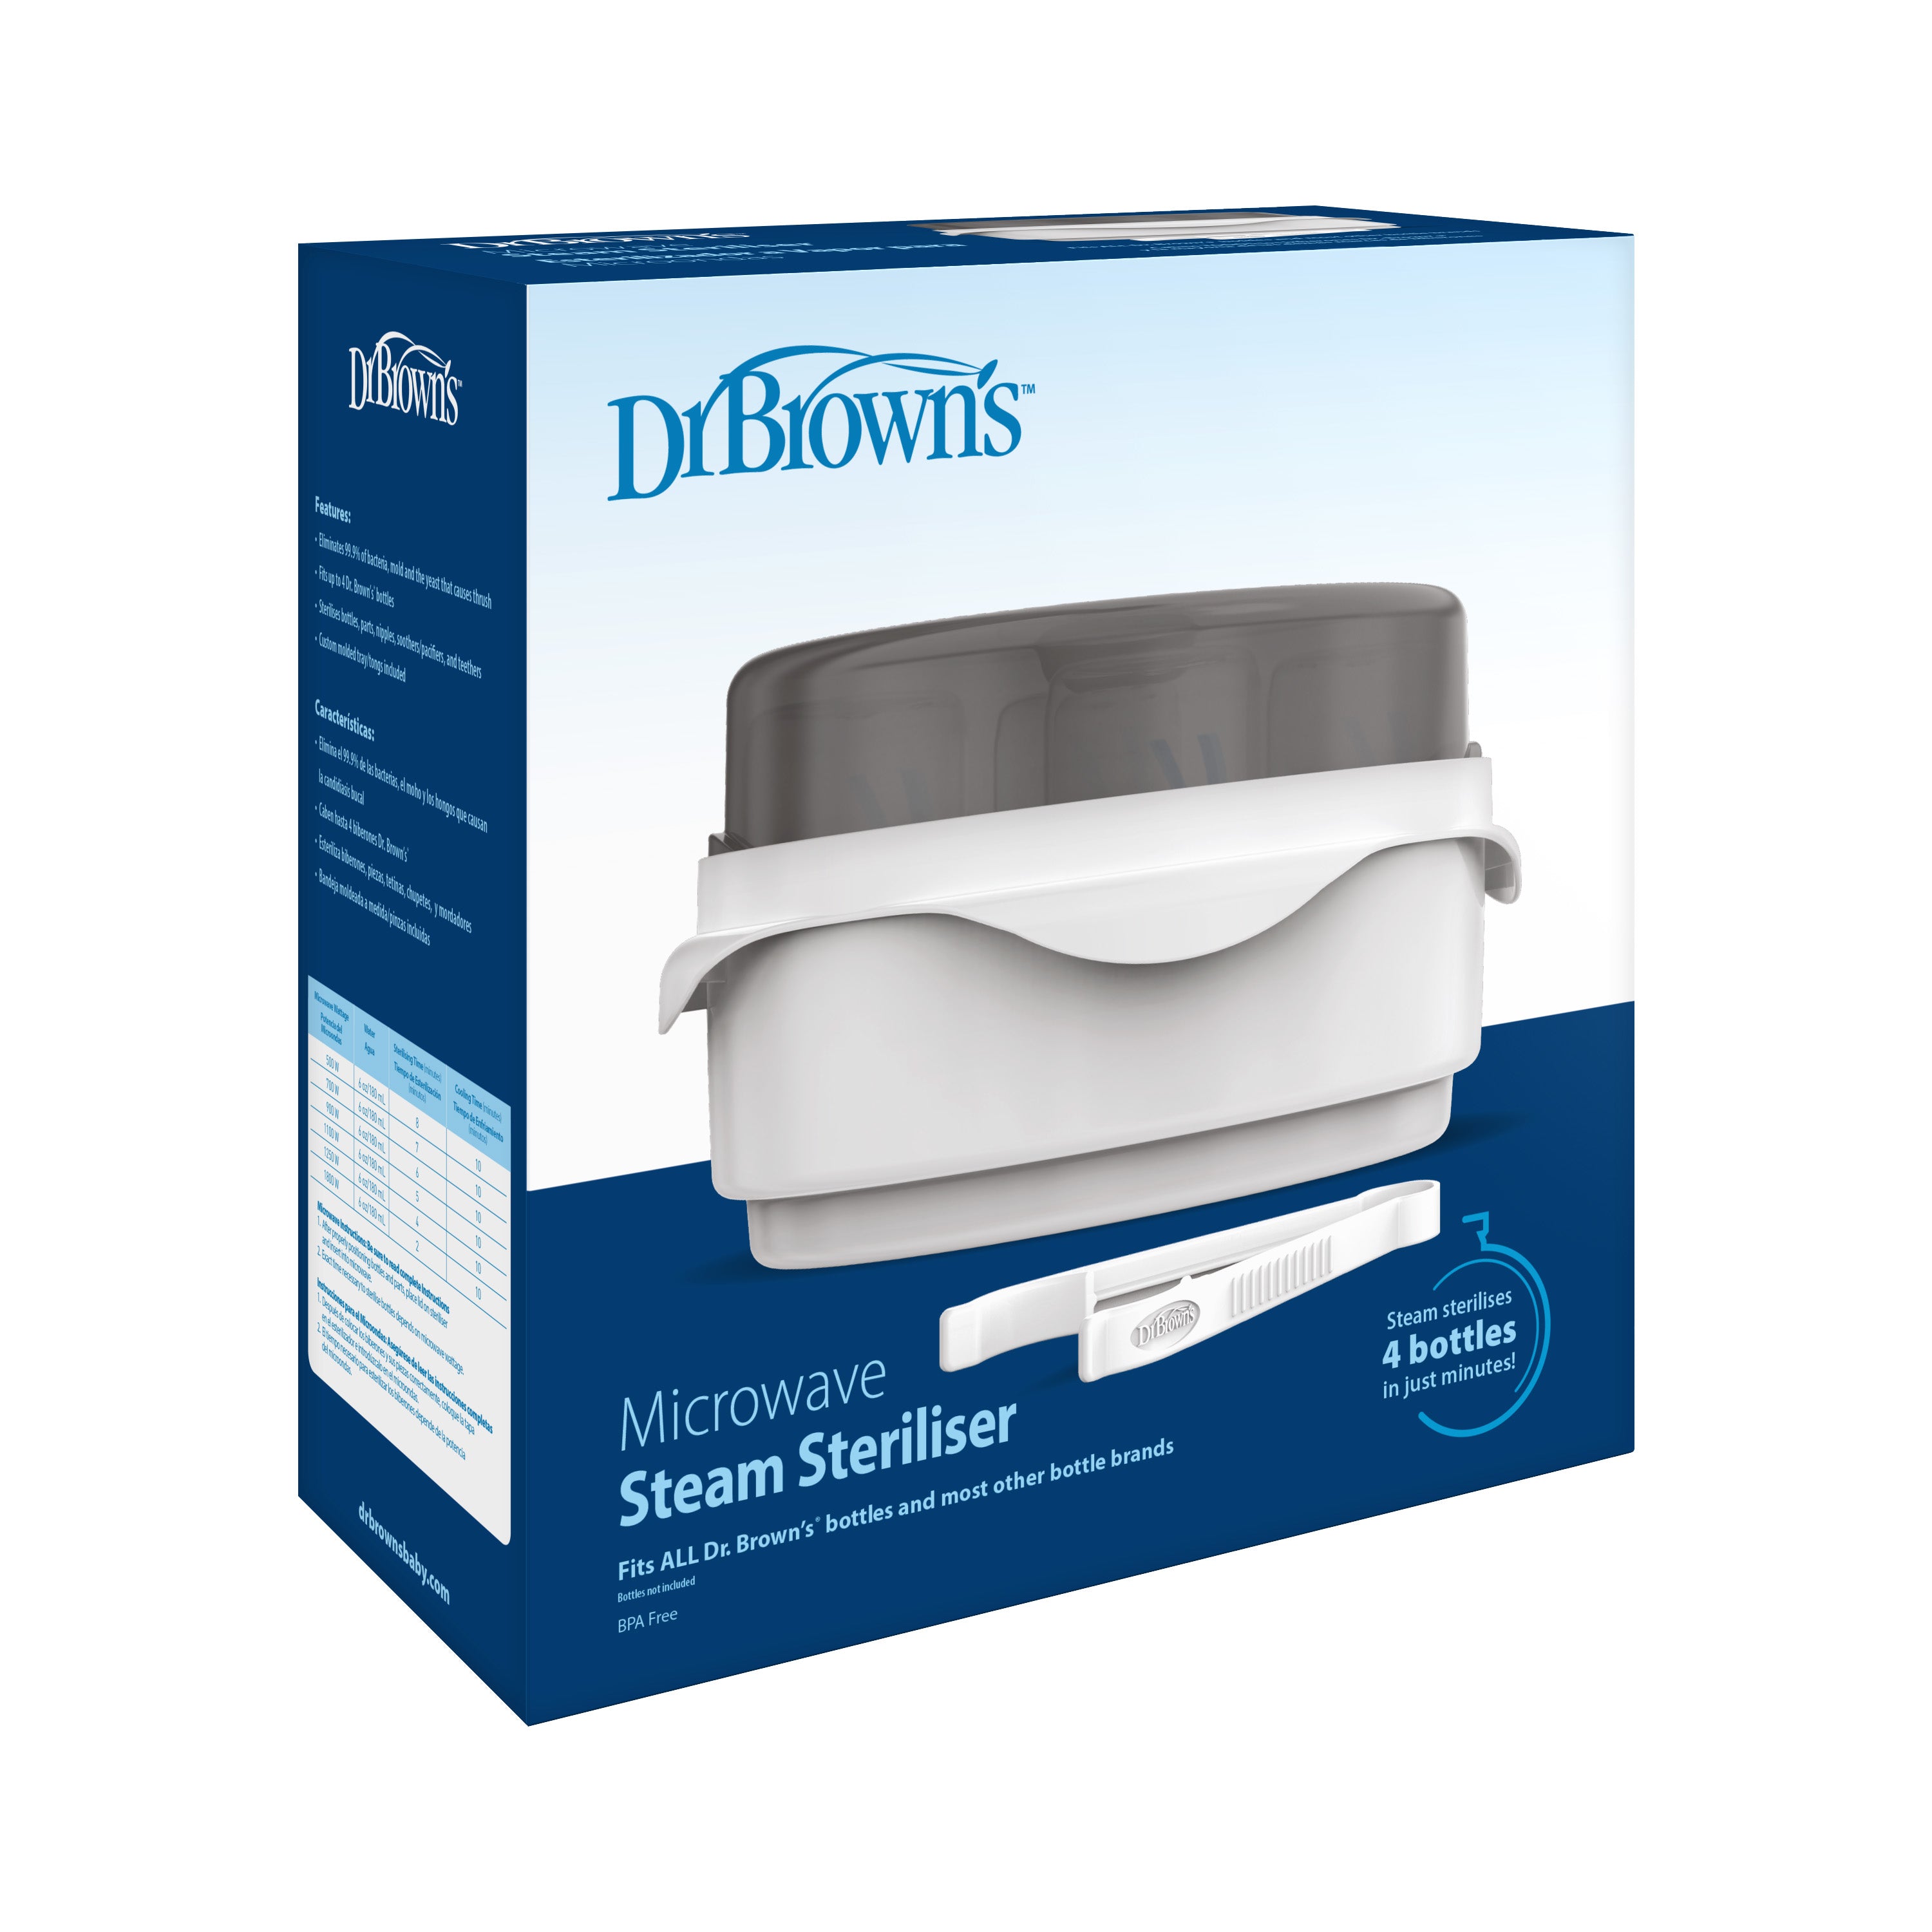 Dr. Brown's Microwave Steam Sterilizer